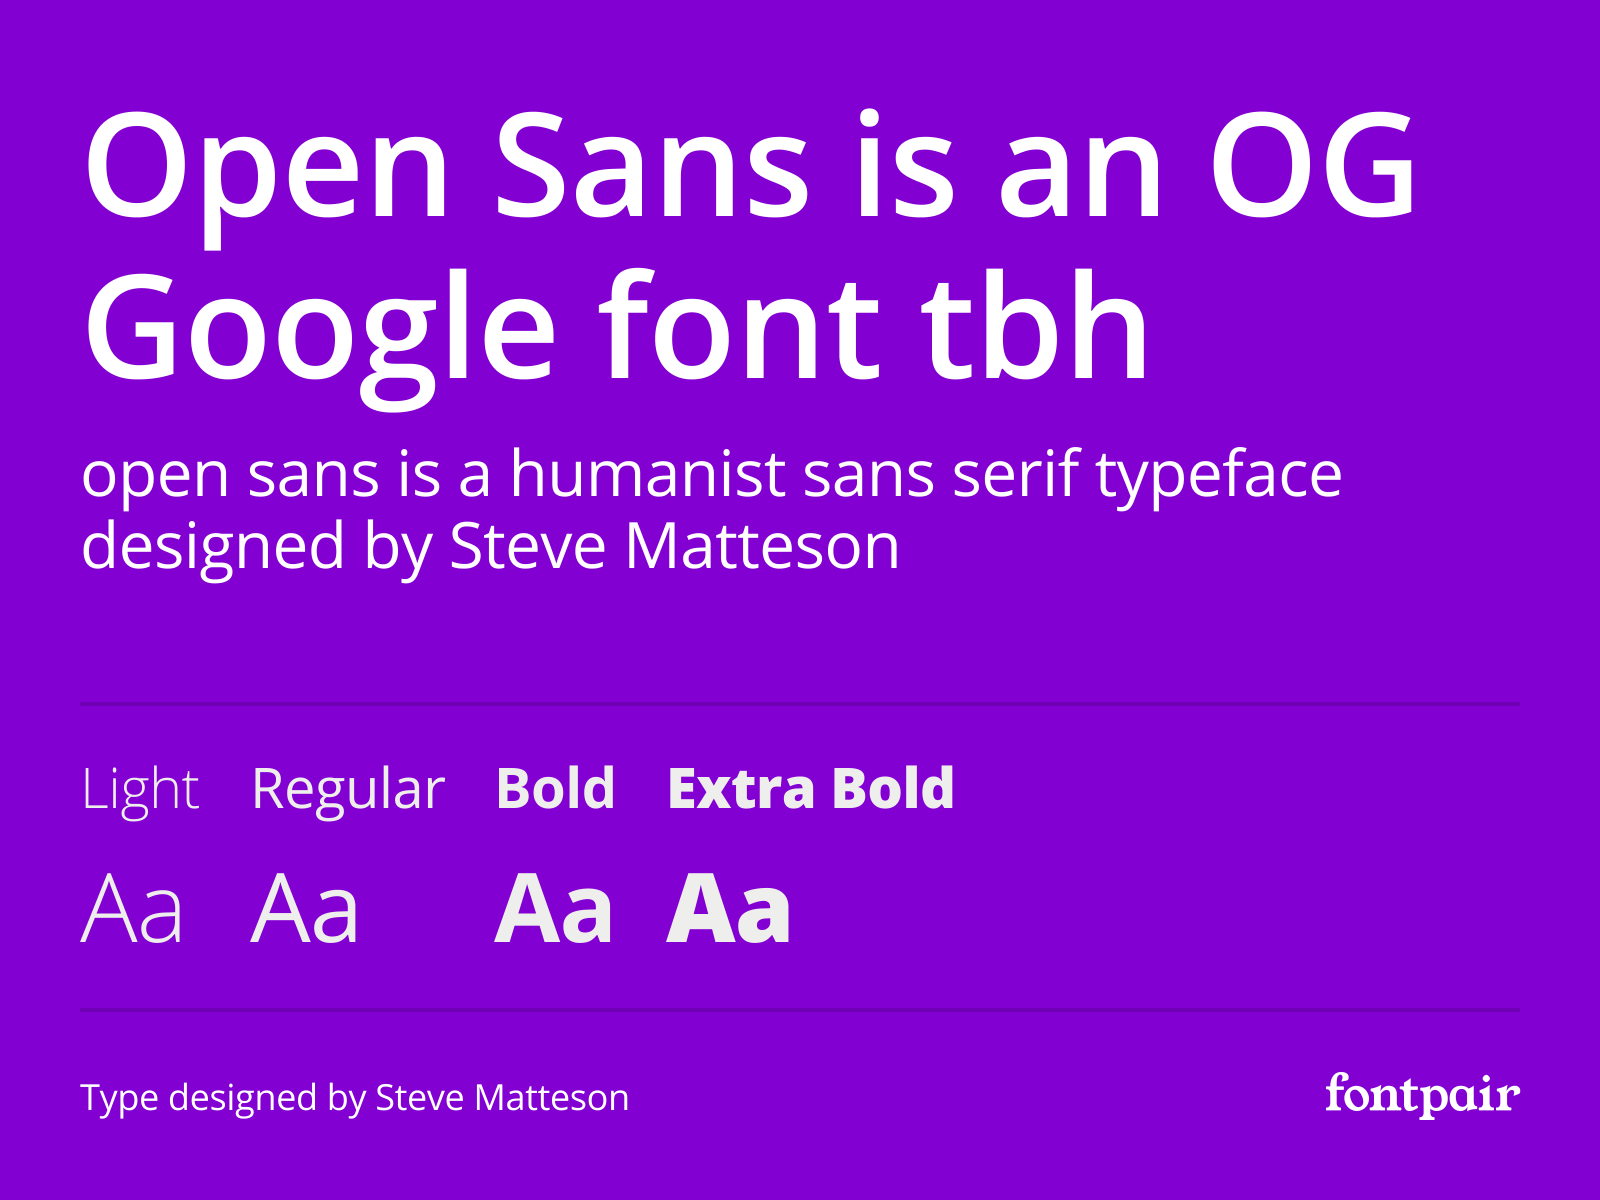 Legepladsudstyr Leia alder Open Sans - Sans-Serif Google Font by fontpair on Dribbble